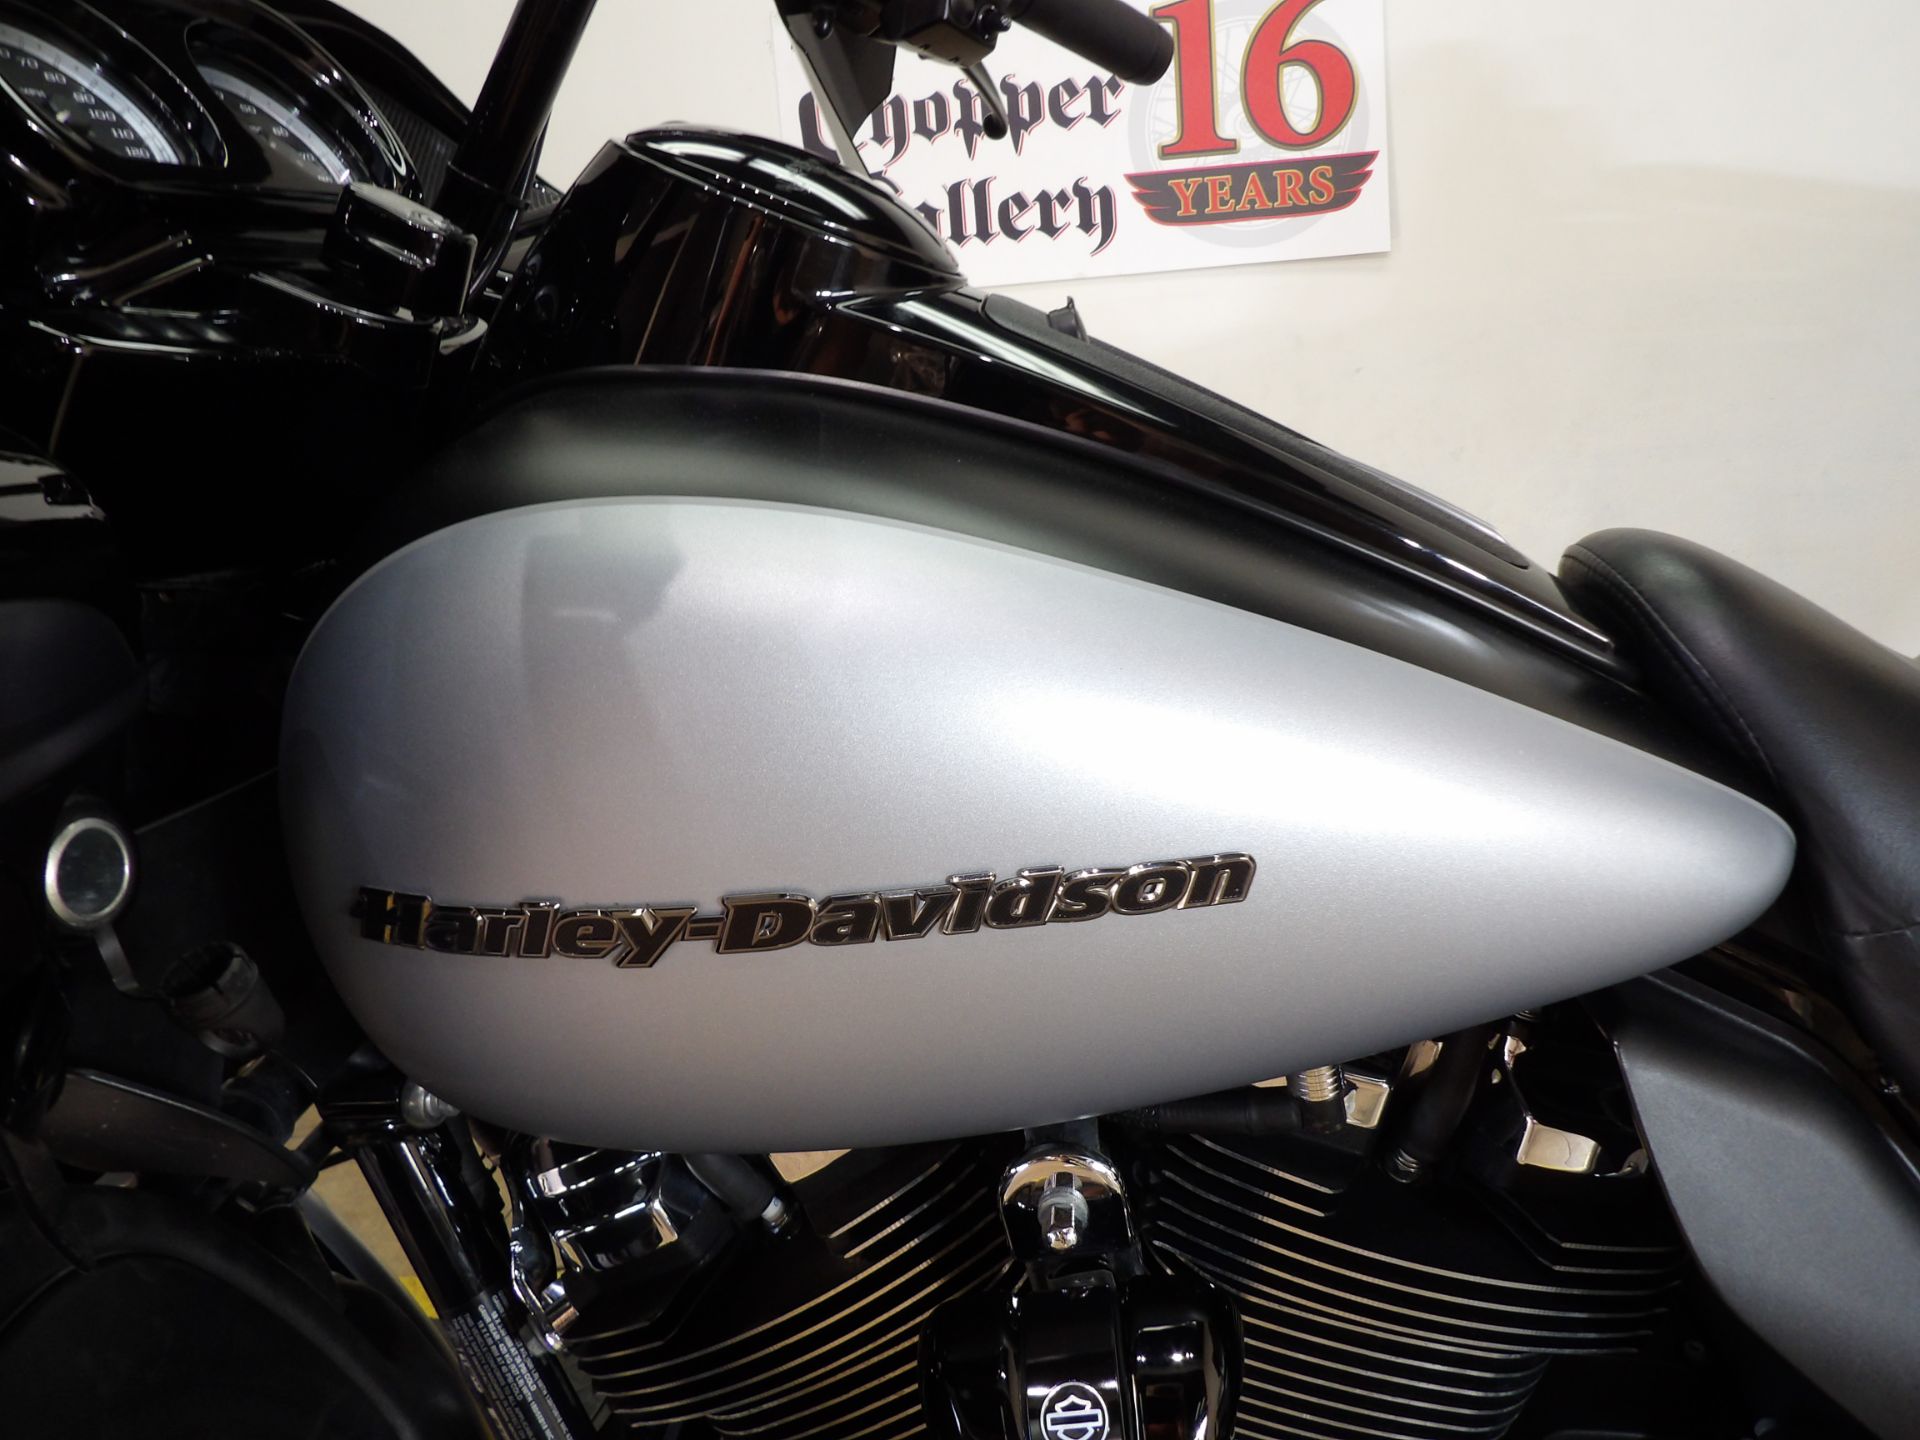 2020 Harley-Davidson Road Glide® Limited in Temecula, California - Photo 12